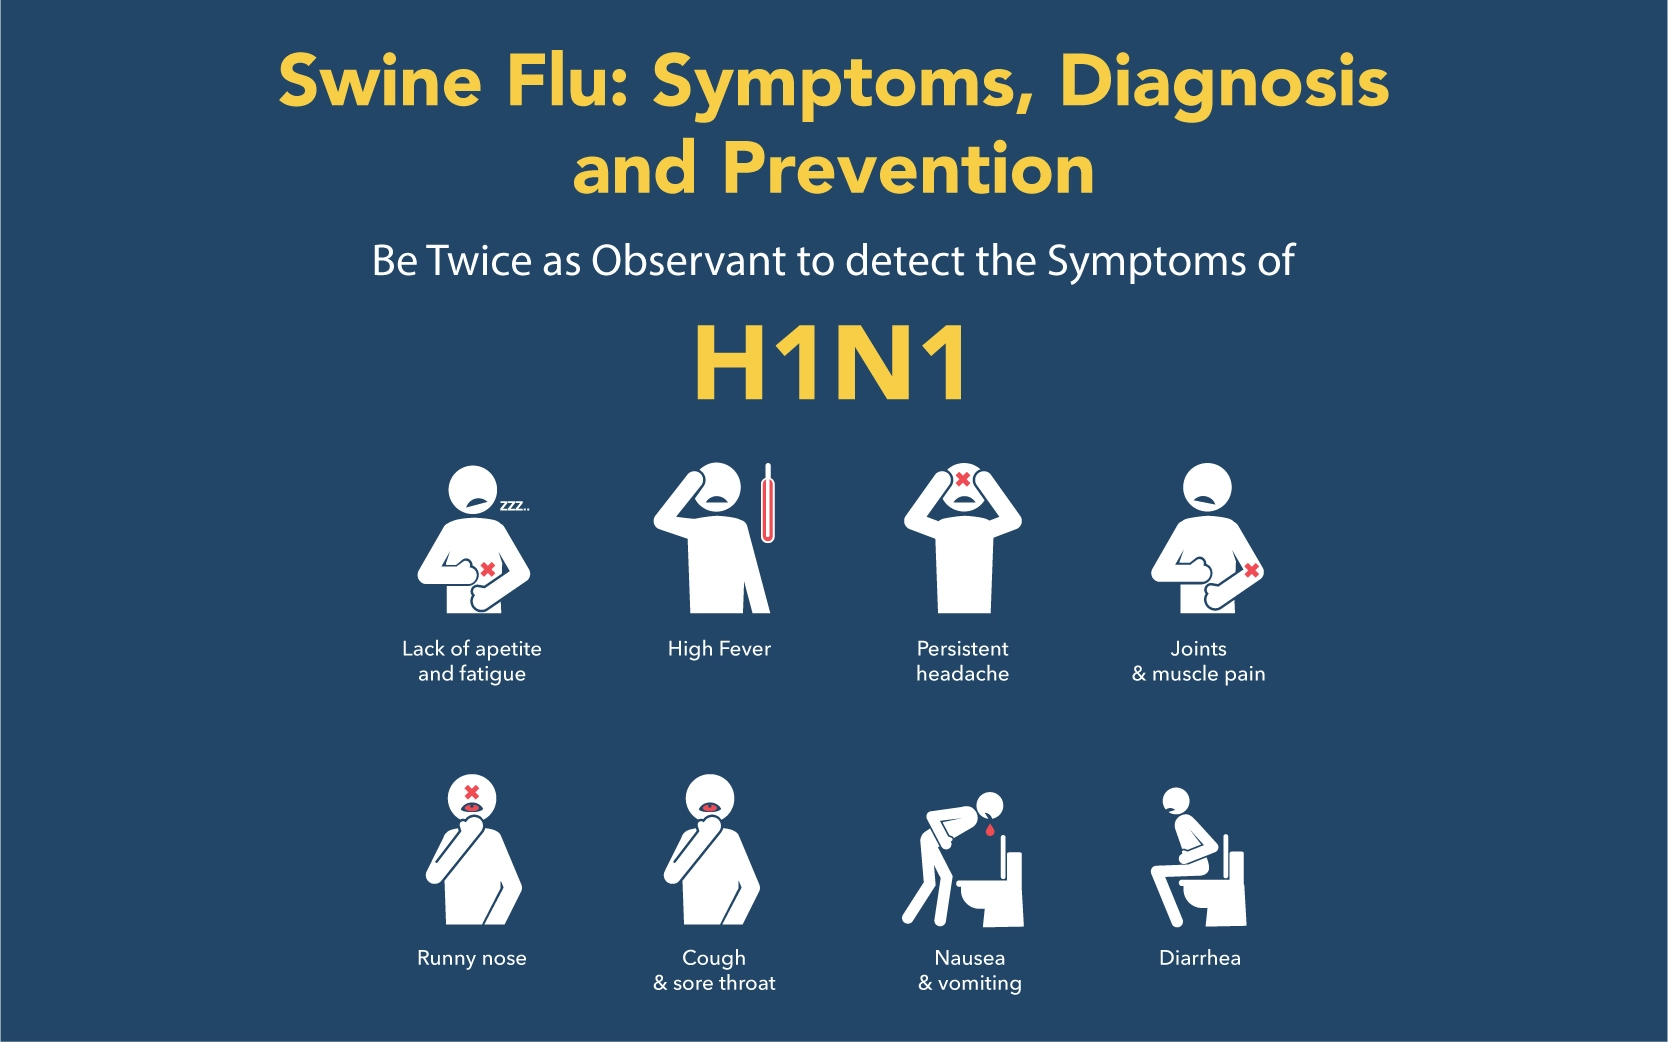 Symptoms and diagnosis of Swine Flu